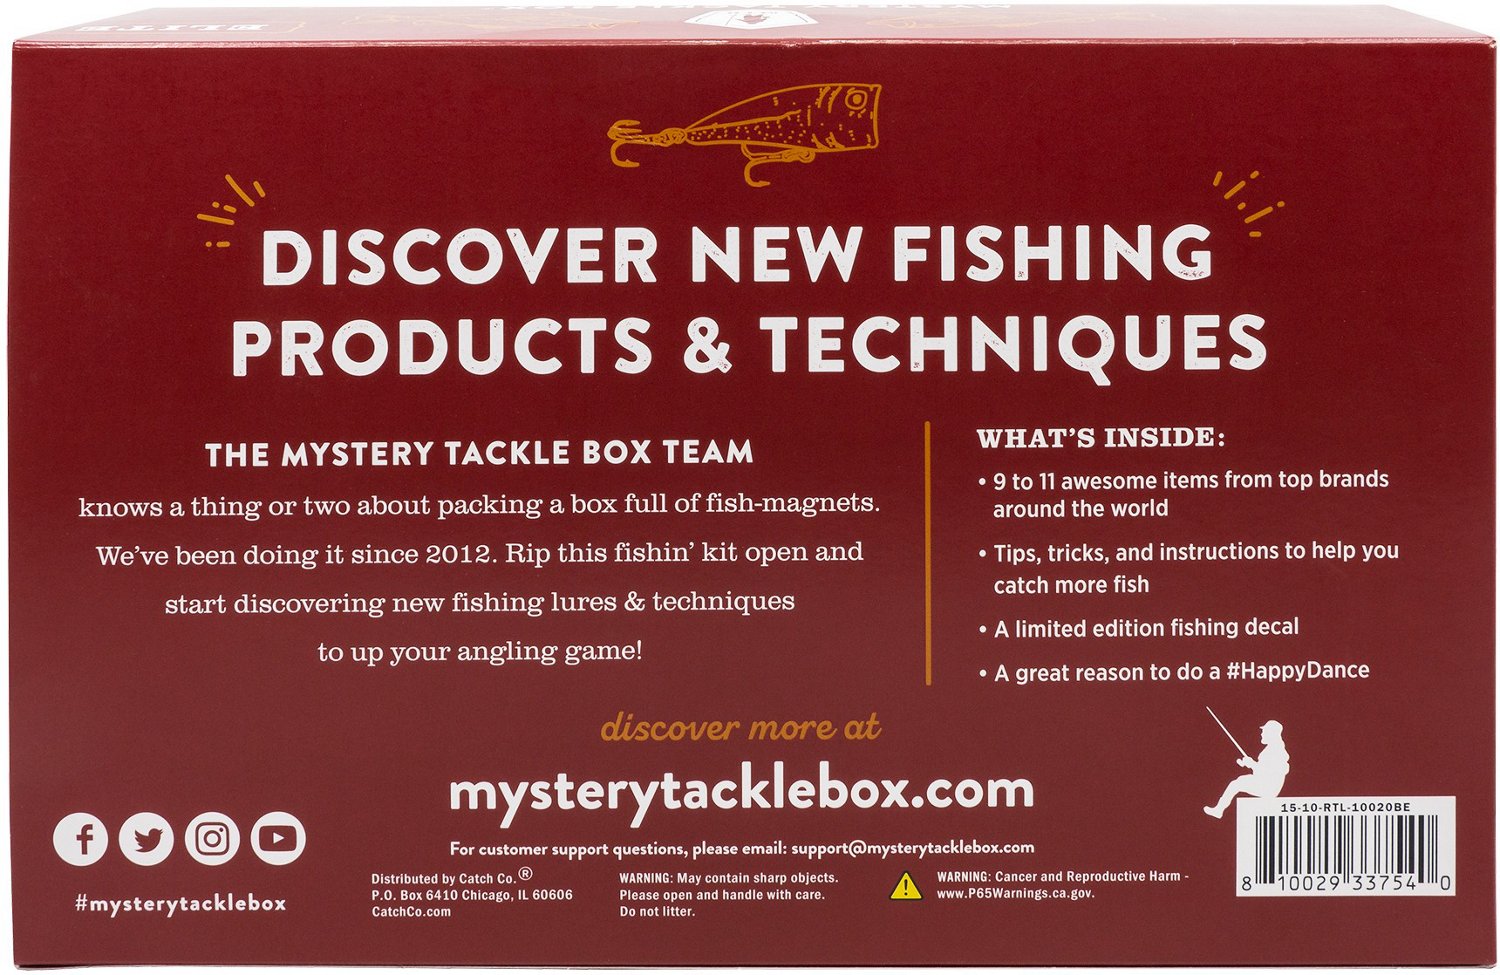 Mystery Fishing Kit